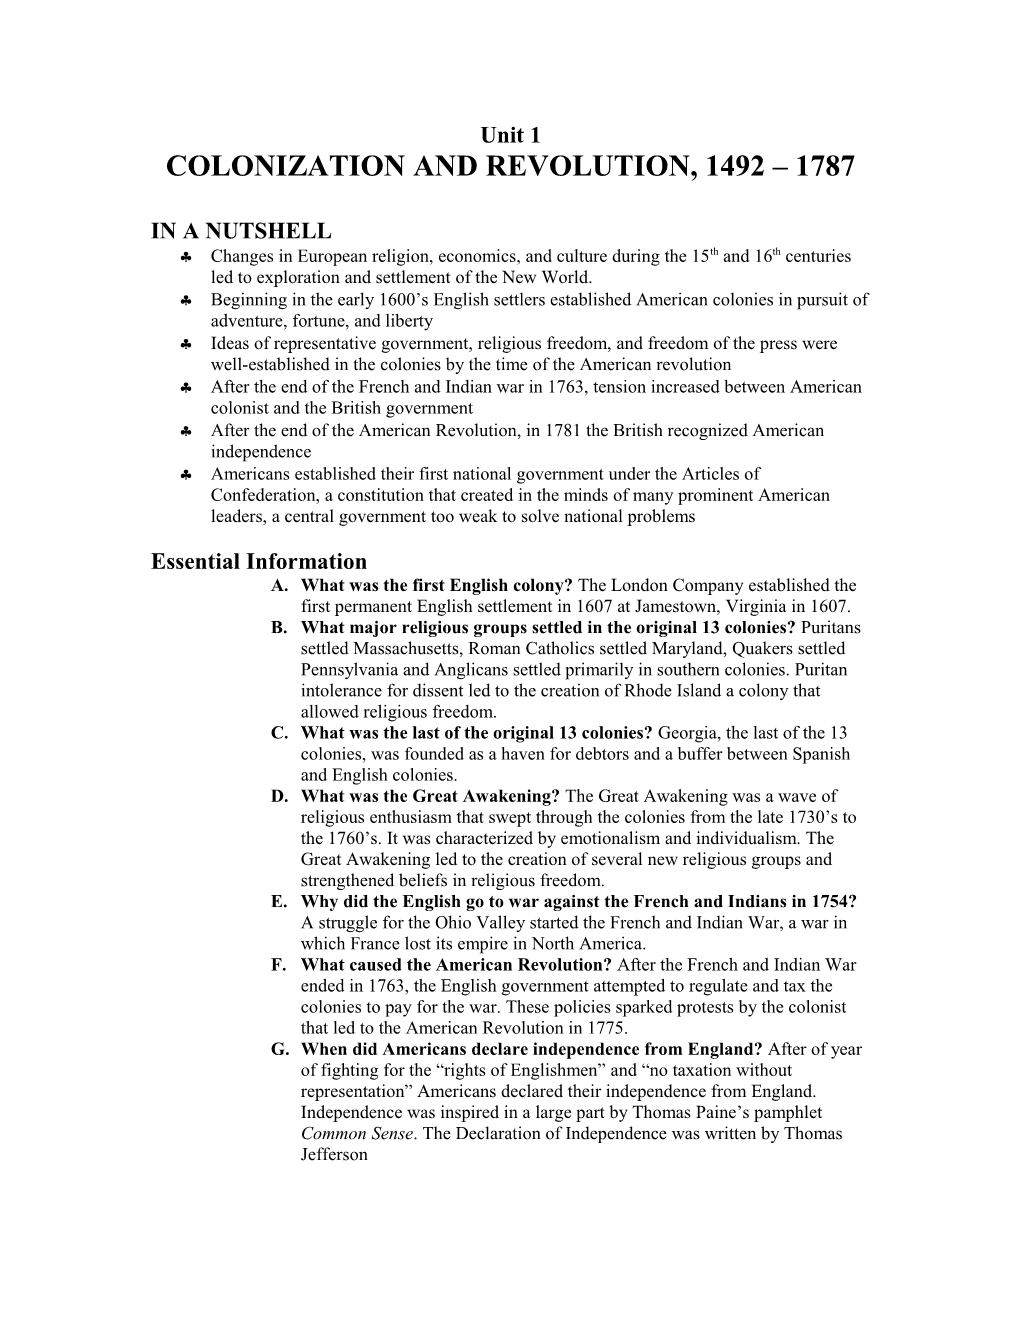 Colonization and Revolution, 1492 1787